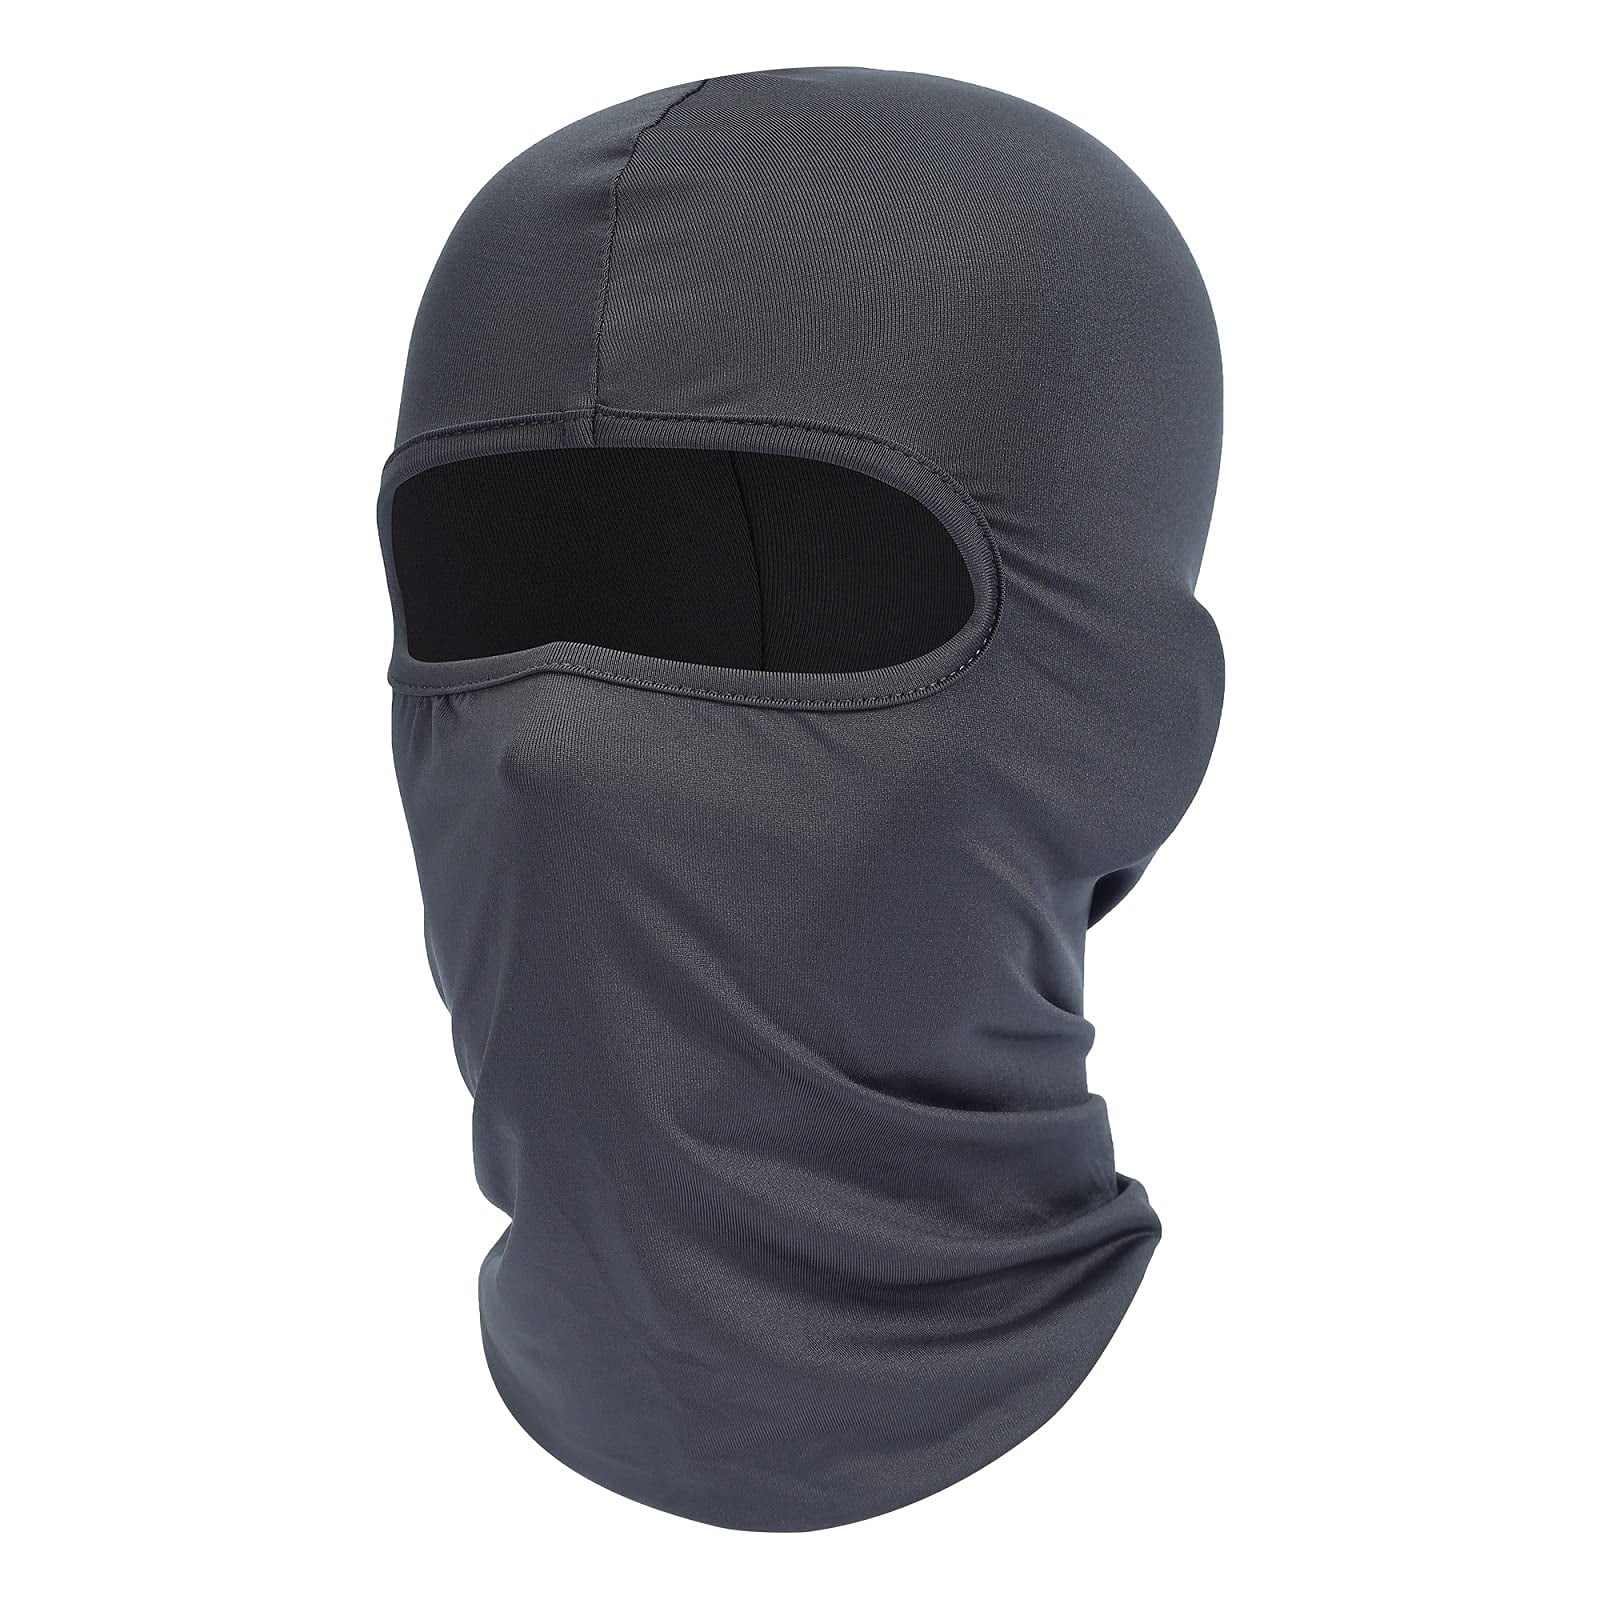 Fuinloth Balaclava Face Mask, Summer Cooling Neck Gaiter, UV Protector Motorcycle Ski Scarf for Men/Women Black